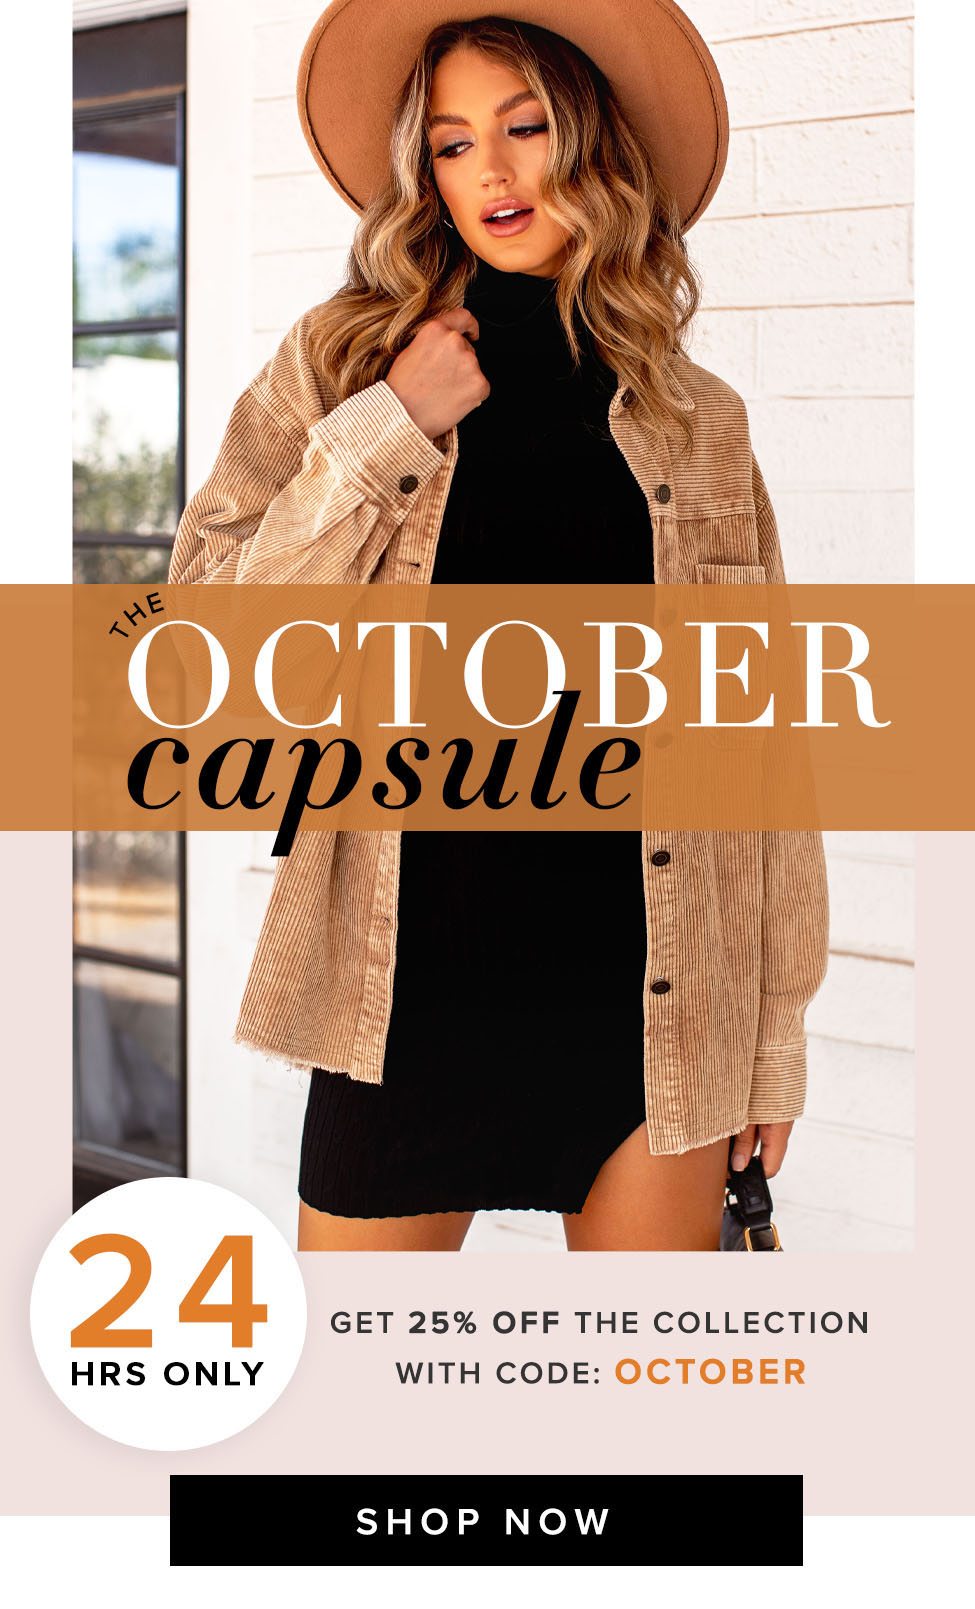 The October Capsule